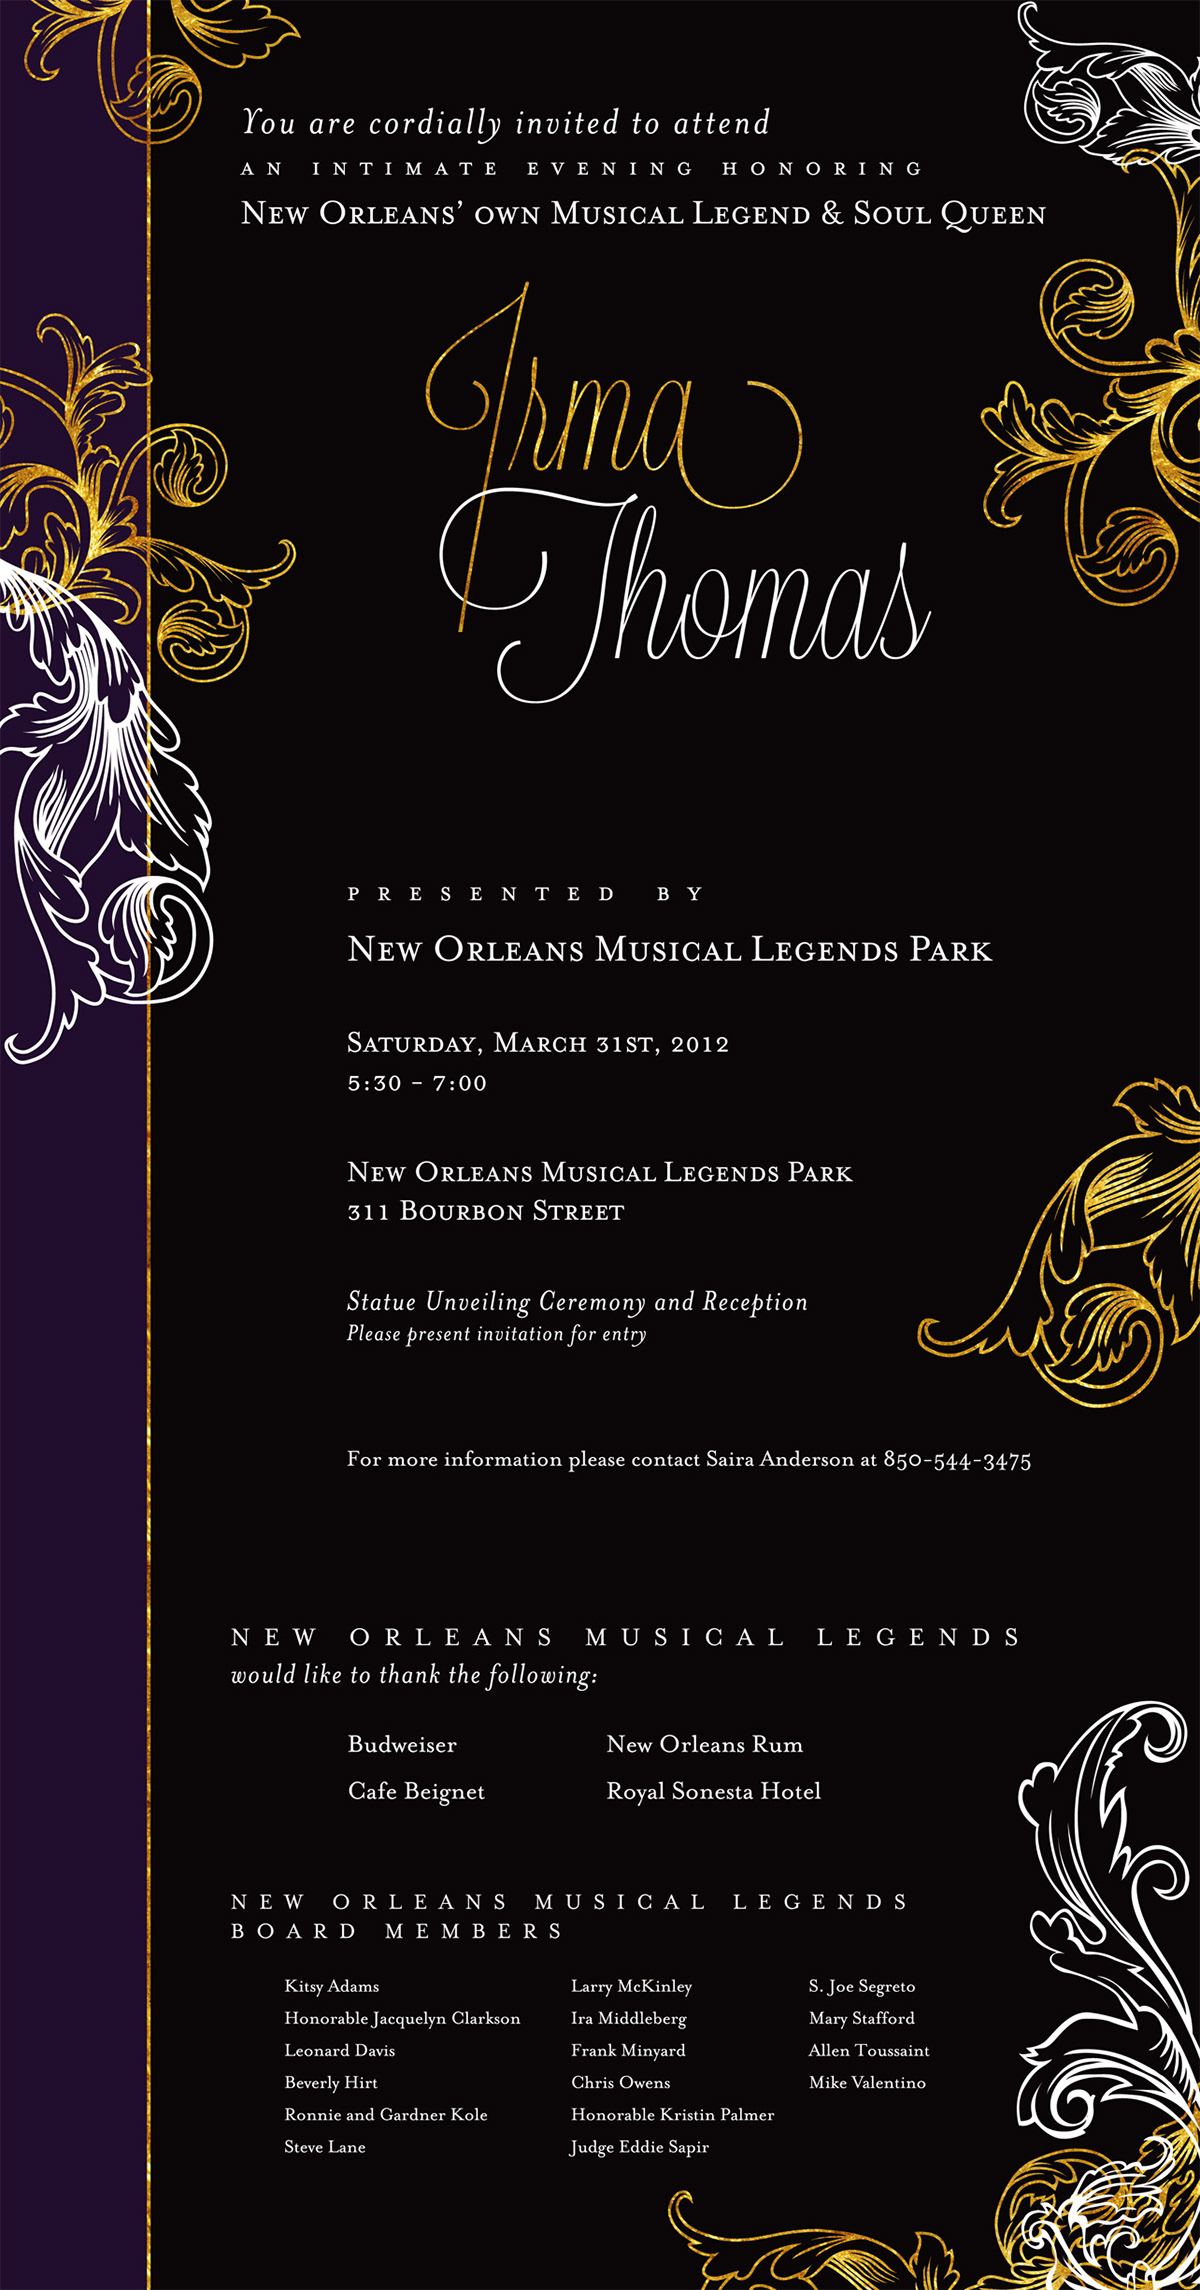 Irma Thomas gospel music Invitation new orleans gospel legend gold leaf ornamental ornaments